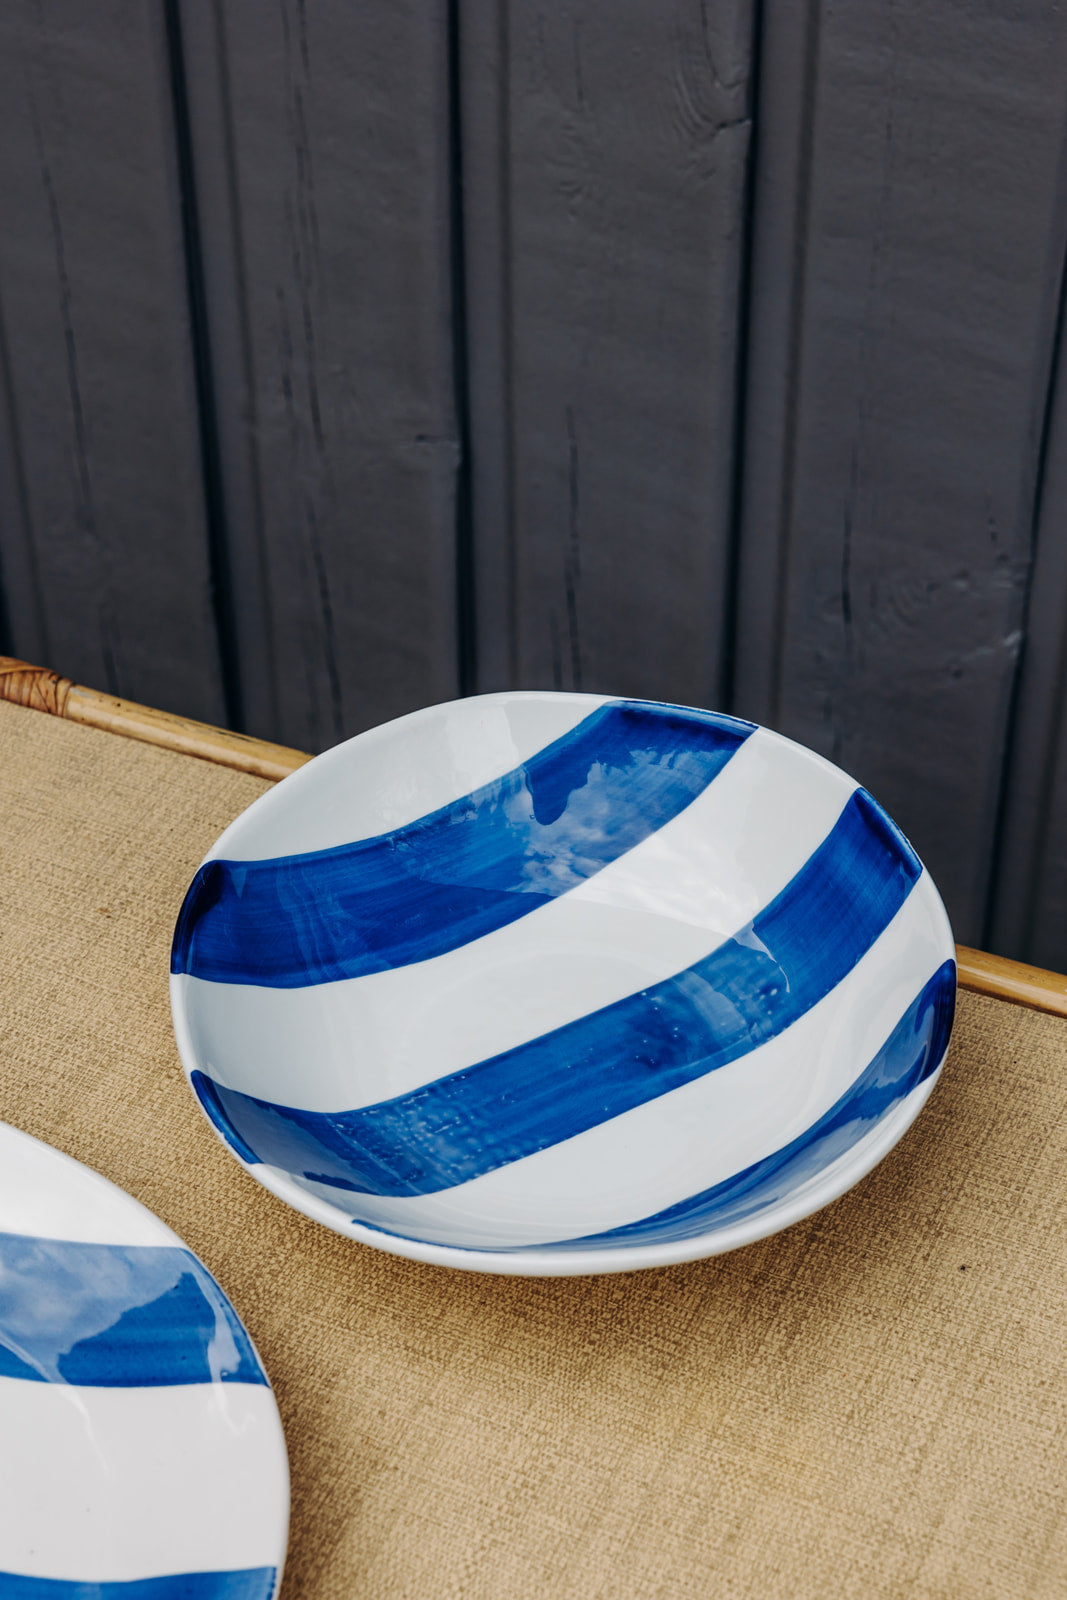 Lucia, the striped ceramic plate